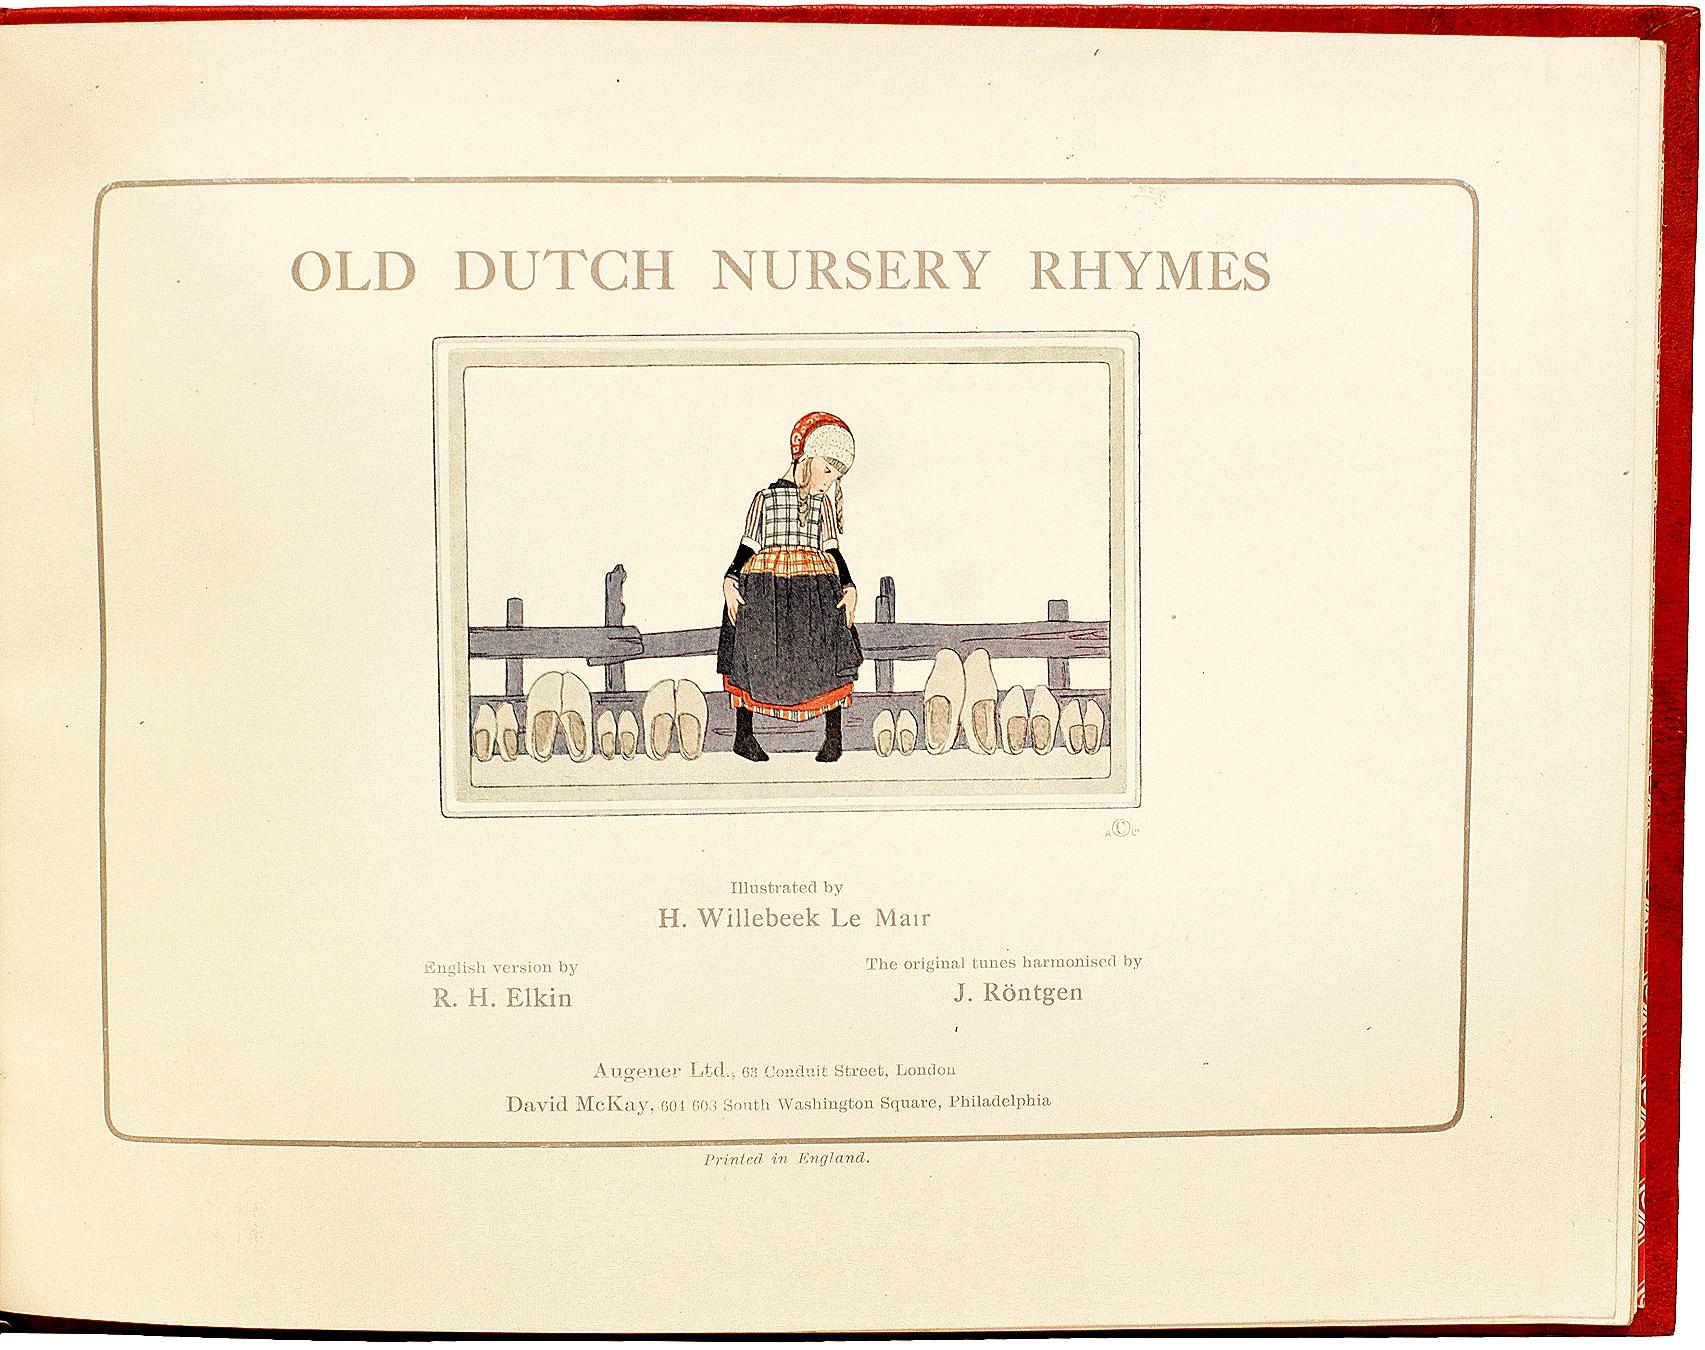 AUTHOR: ELKIN, R. H. (translator) - Rontgen, J. (tunes by) - H. Willebeek Le Mair - (illustrator). 

TITLE: Old Dutch Nursery Rhymes.

PUBLISHER: London: Augener, Ltd., 1917.

DESCRIPTION: FIRST EDITION IN ENGLISH. 1 vol., 11-1/2